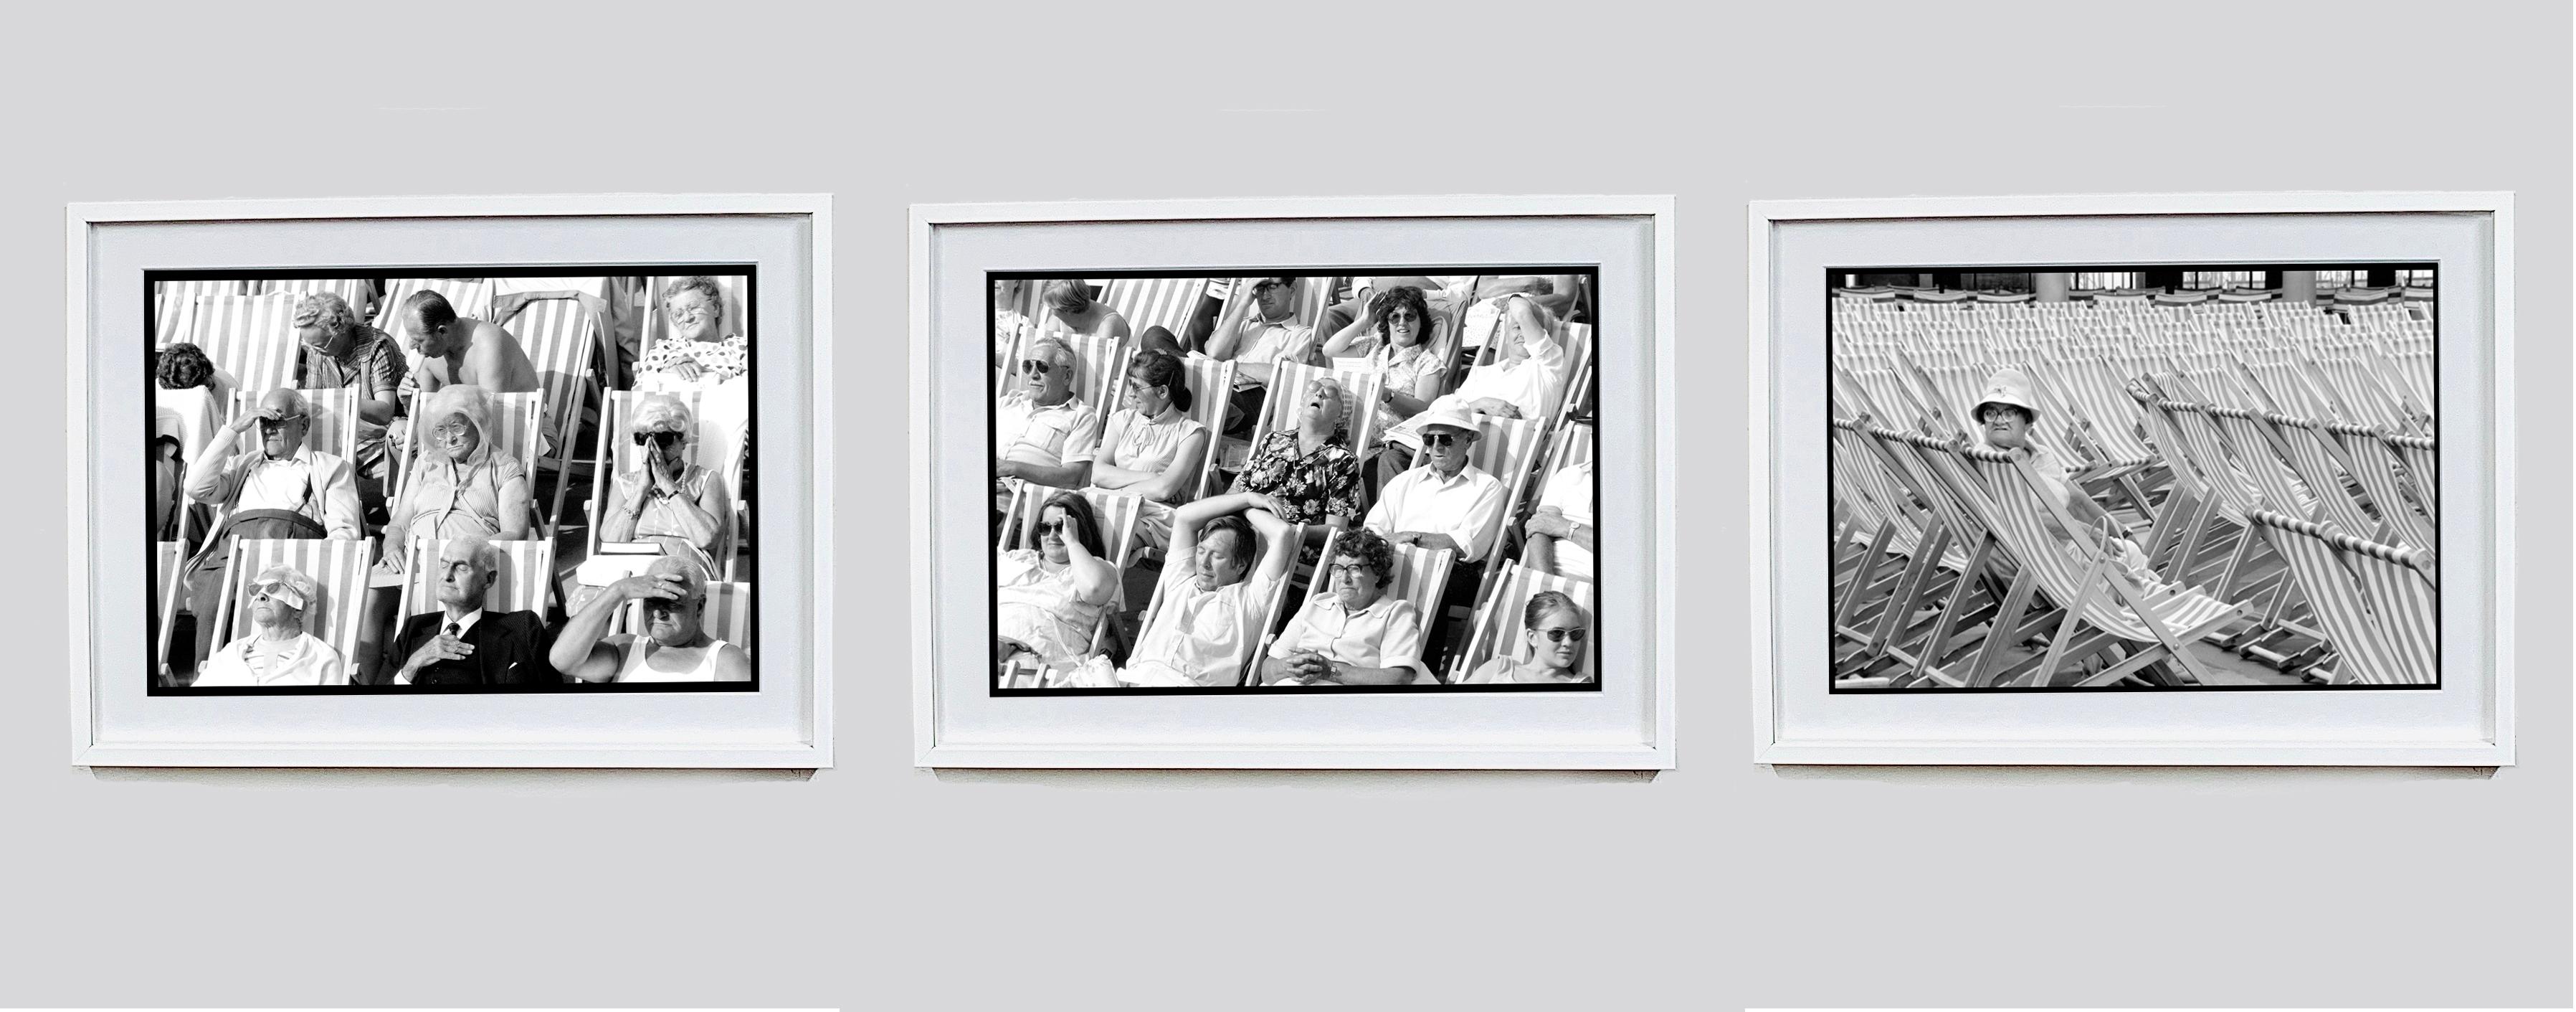 Bandstand II, Eastbourne, UK - Black and White Vintage Photography 1